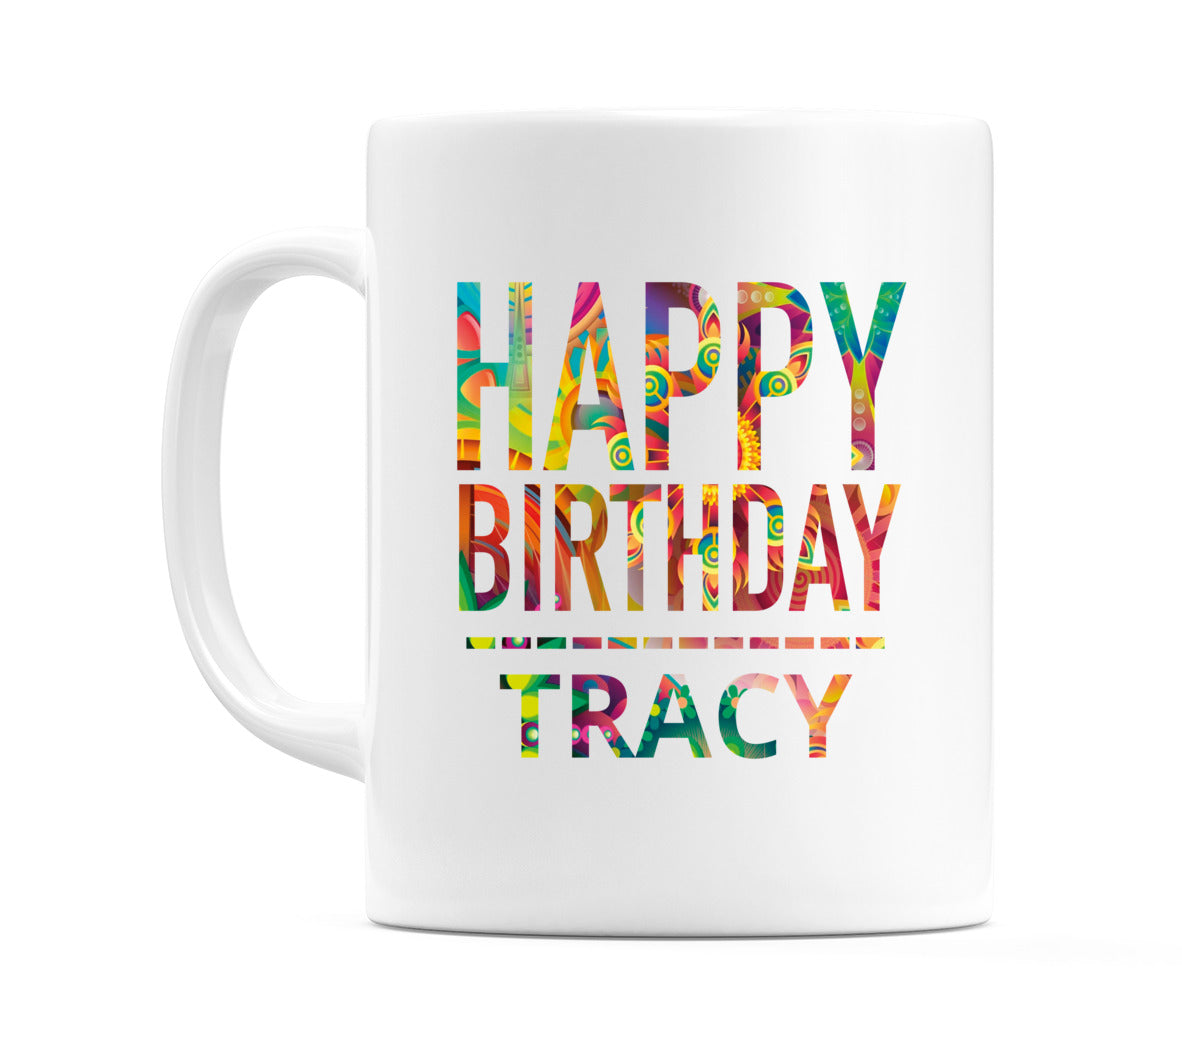 Happy Birthday Tracy (Tie Dye Effect) Mug Cup by WeDoMugs